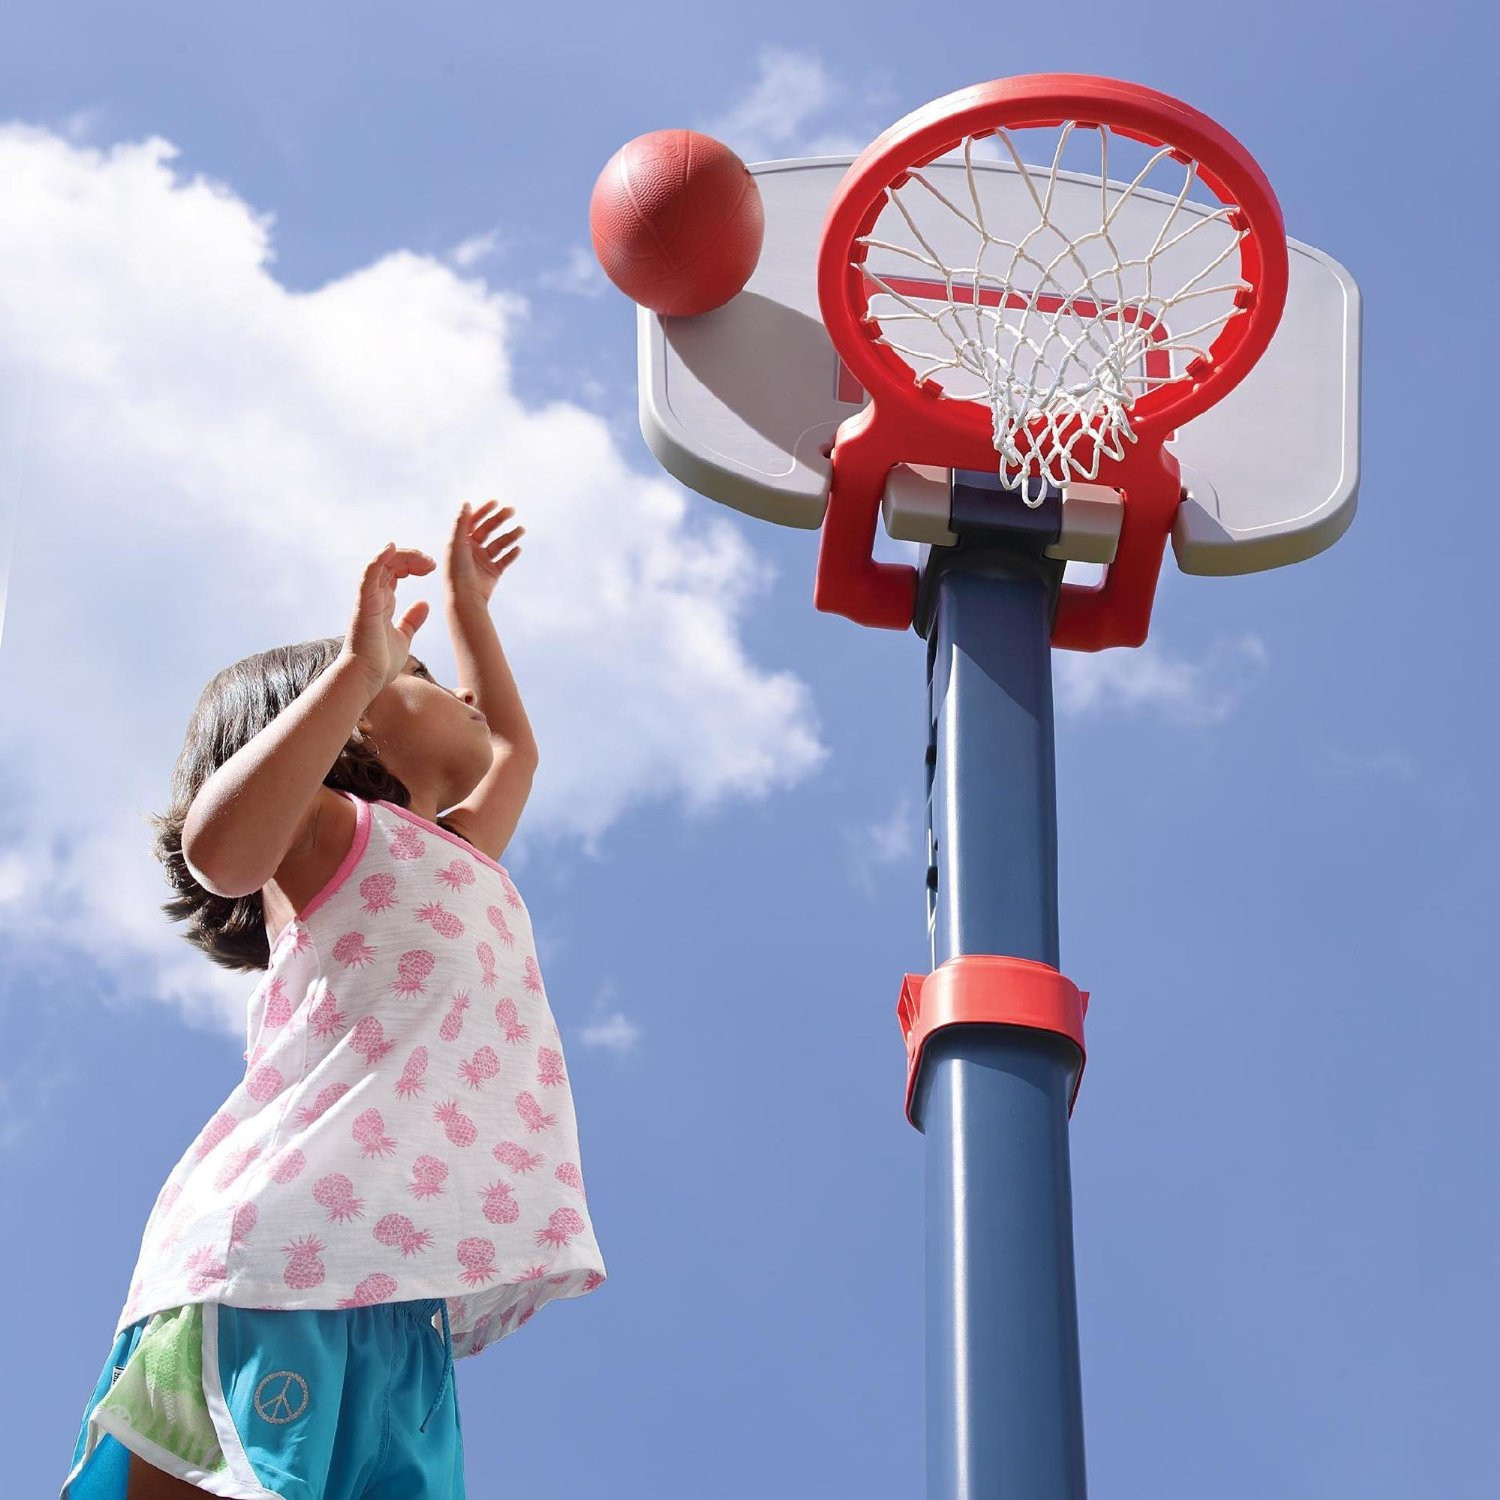 Indoor Basketball Hoops Kids
 Buy Adjustable Basketball Hoop For Kids Indoor Outdoor